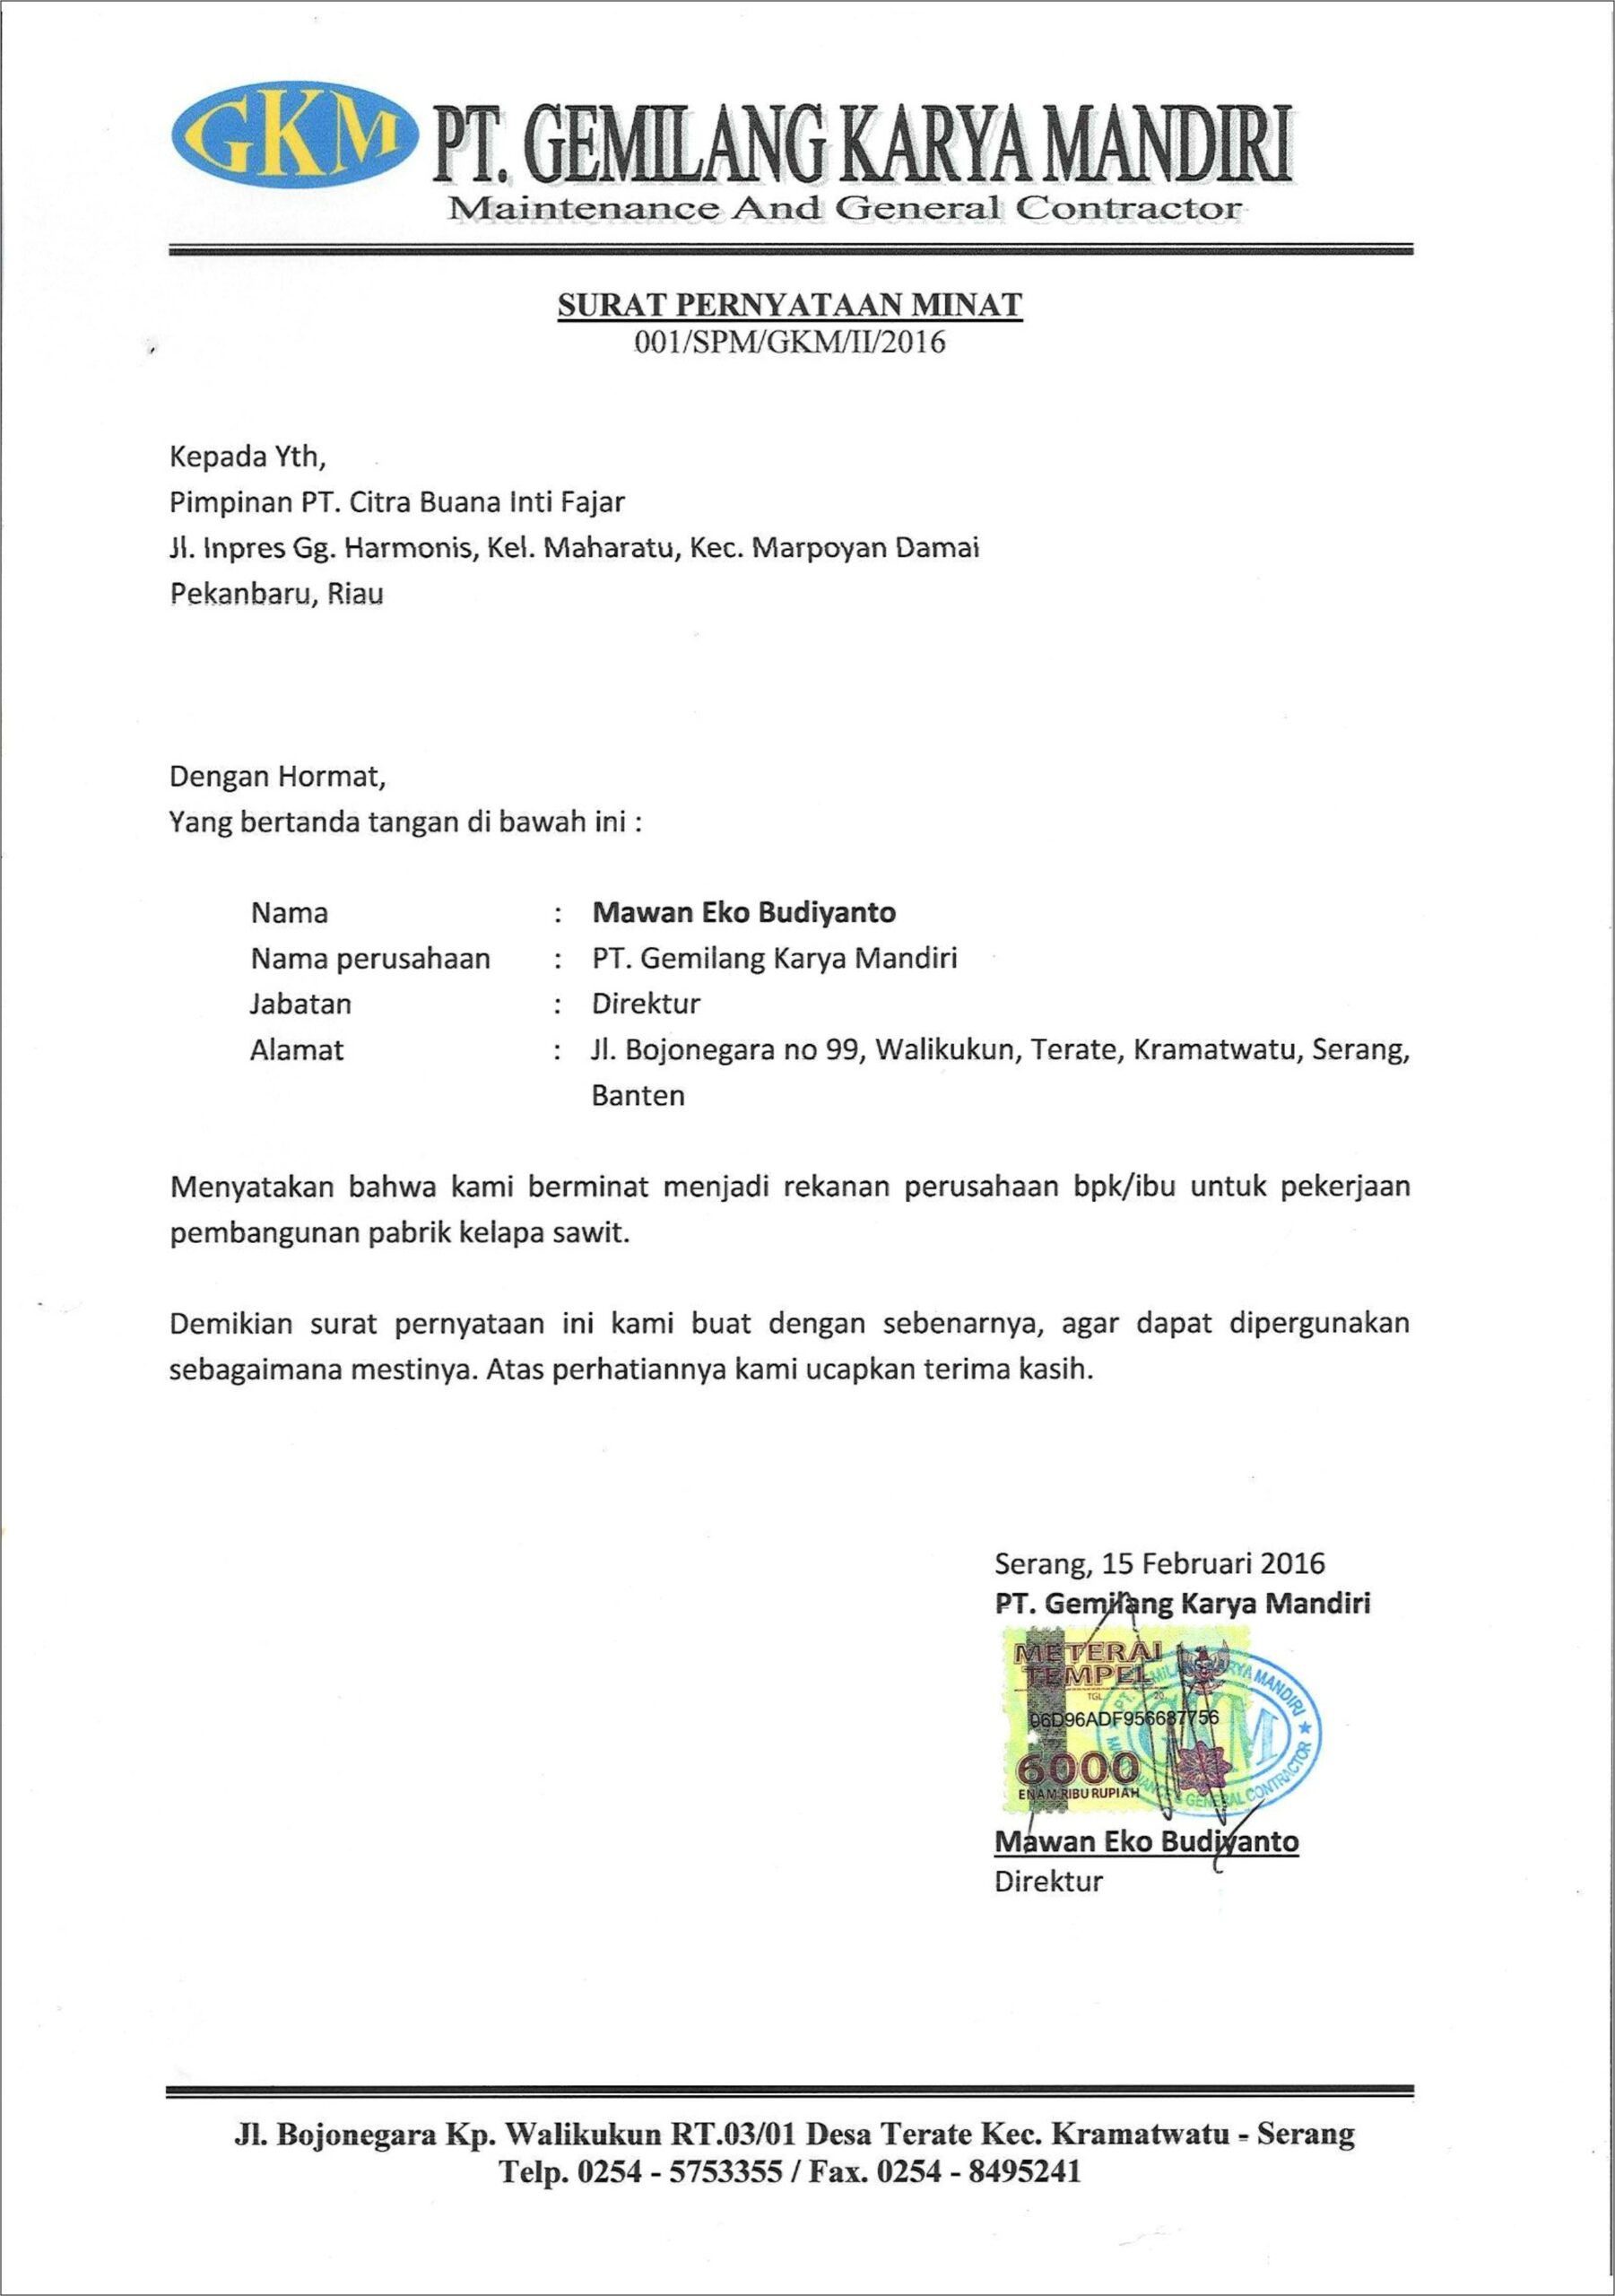 Contoh Surat Pernyataan Minat Vendor Garuda